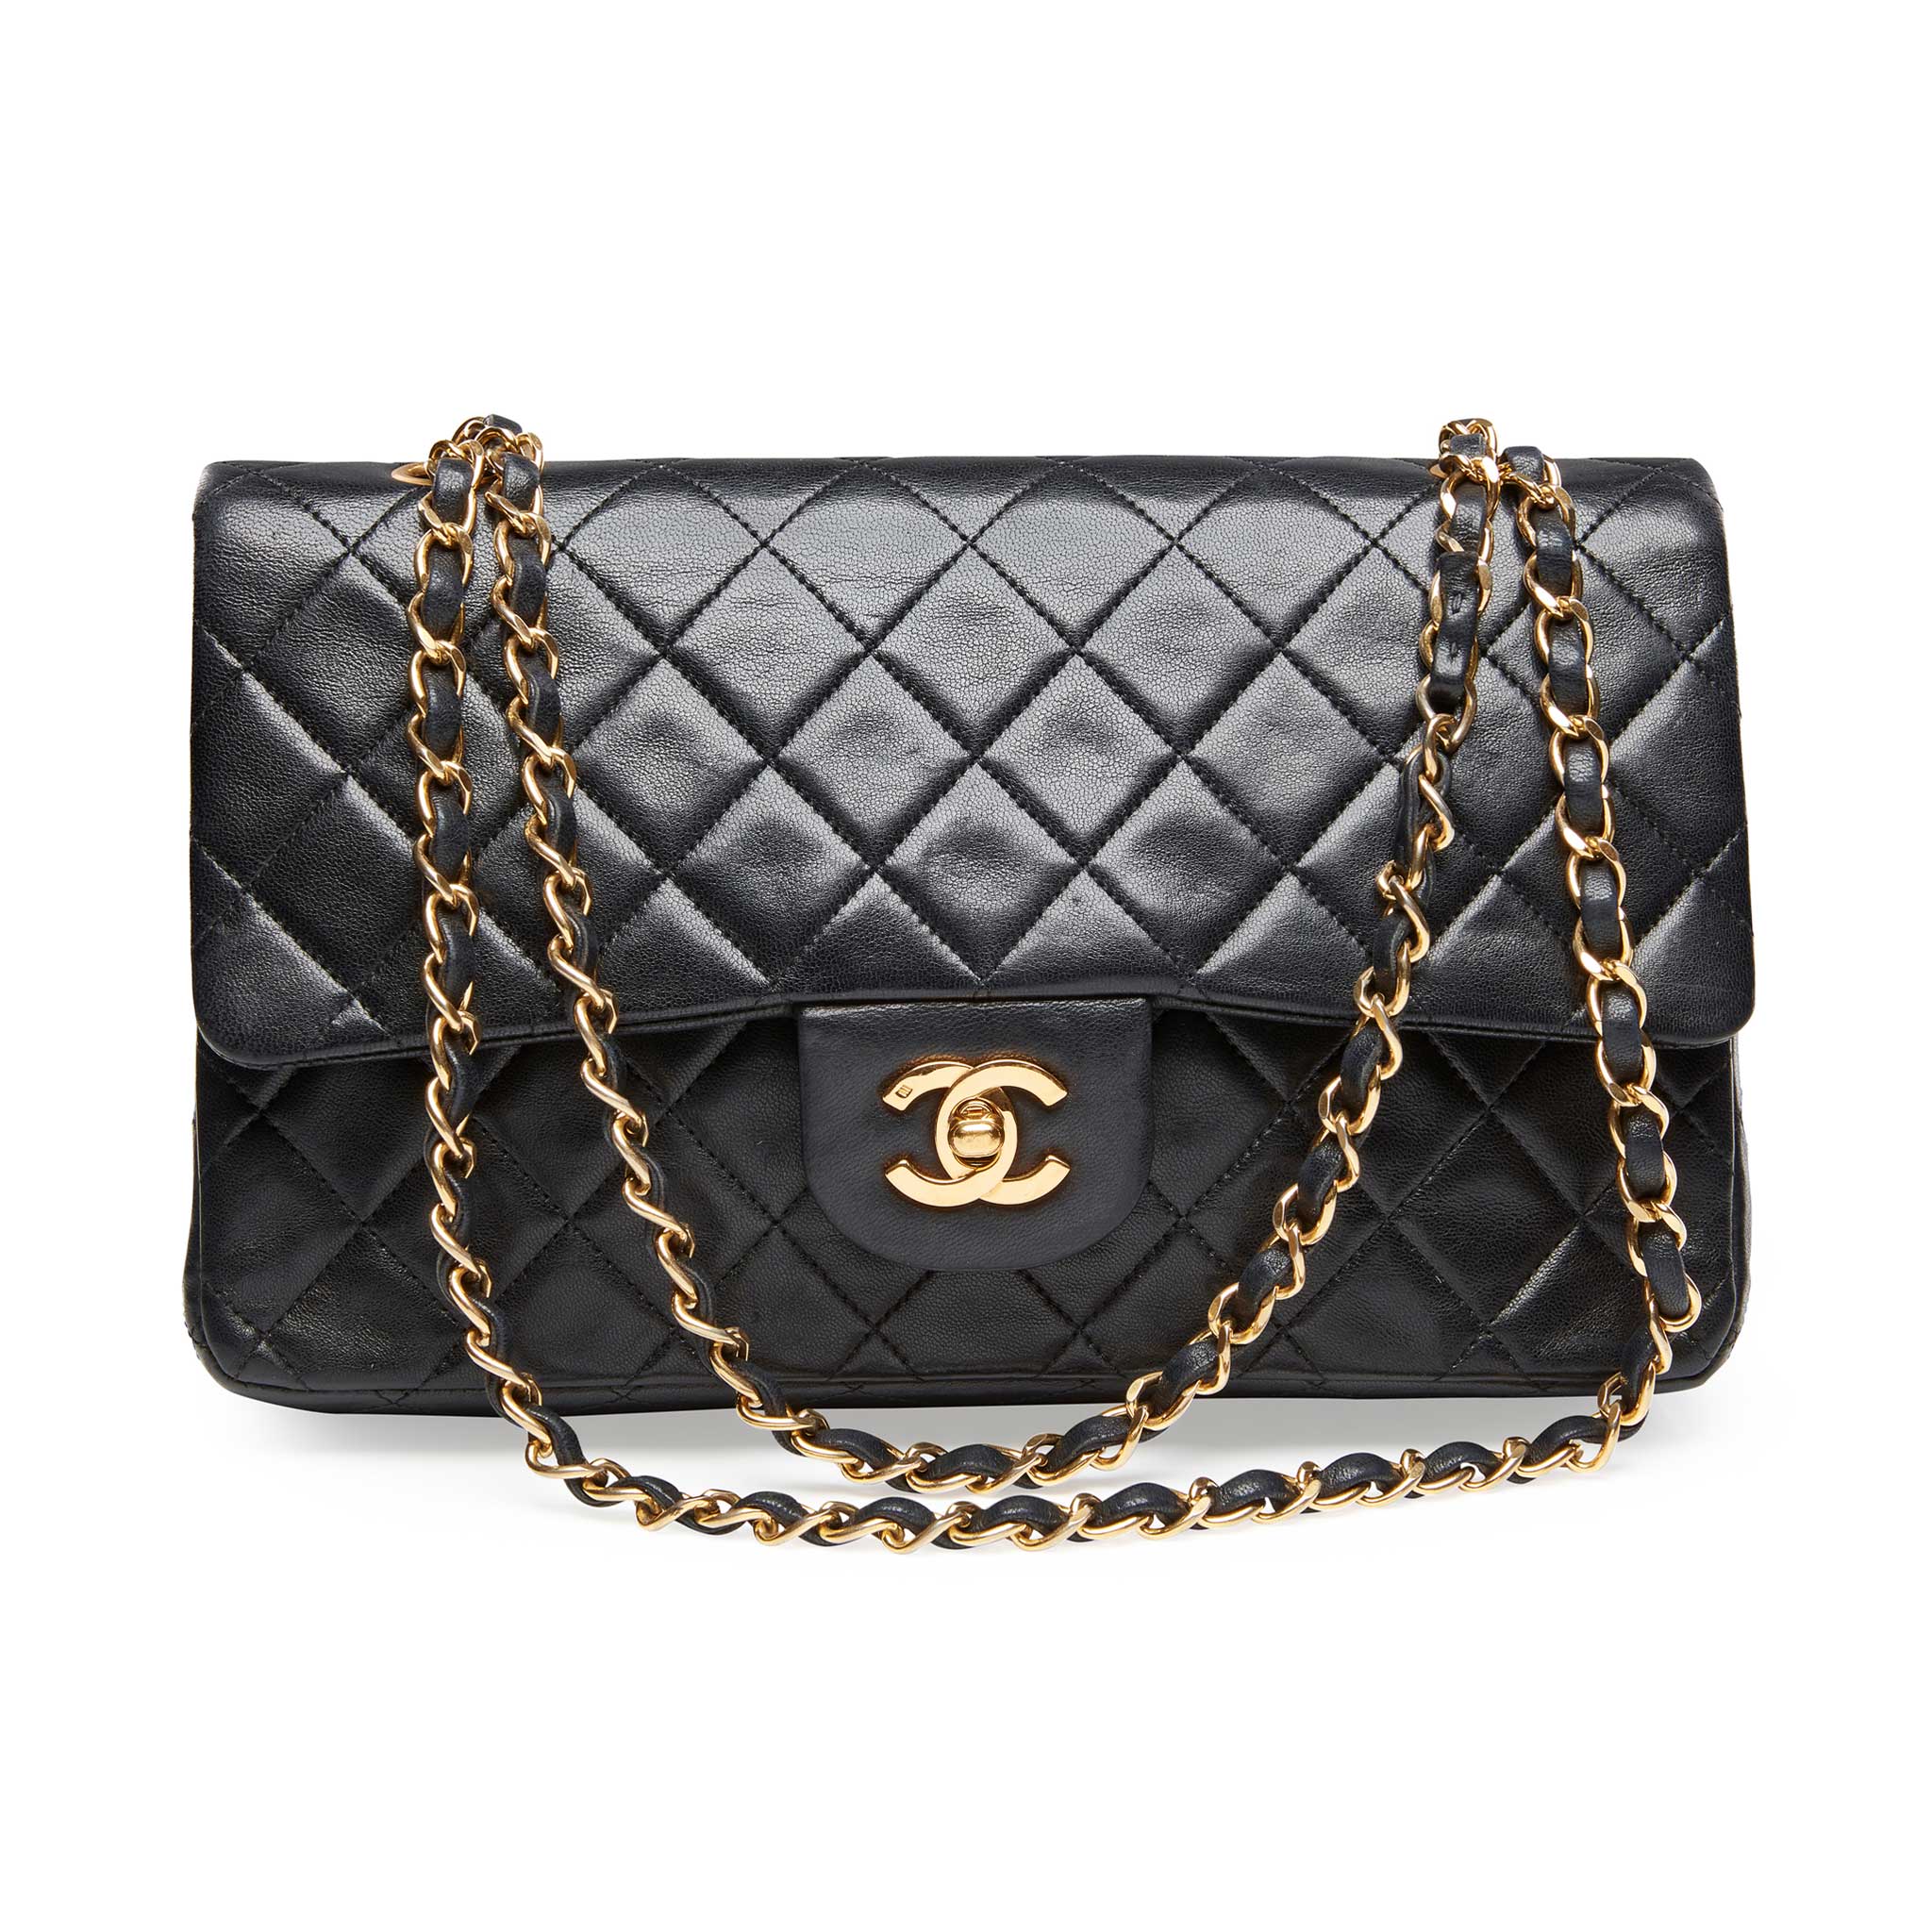 Chanel Handbag Auction | Lyon & Turnbull